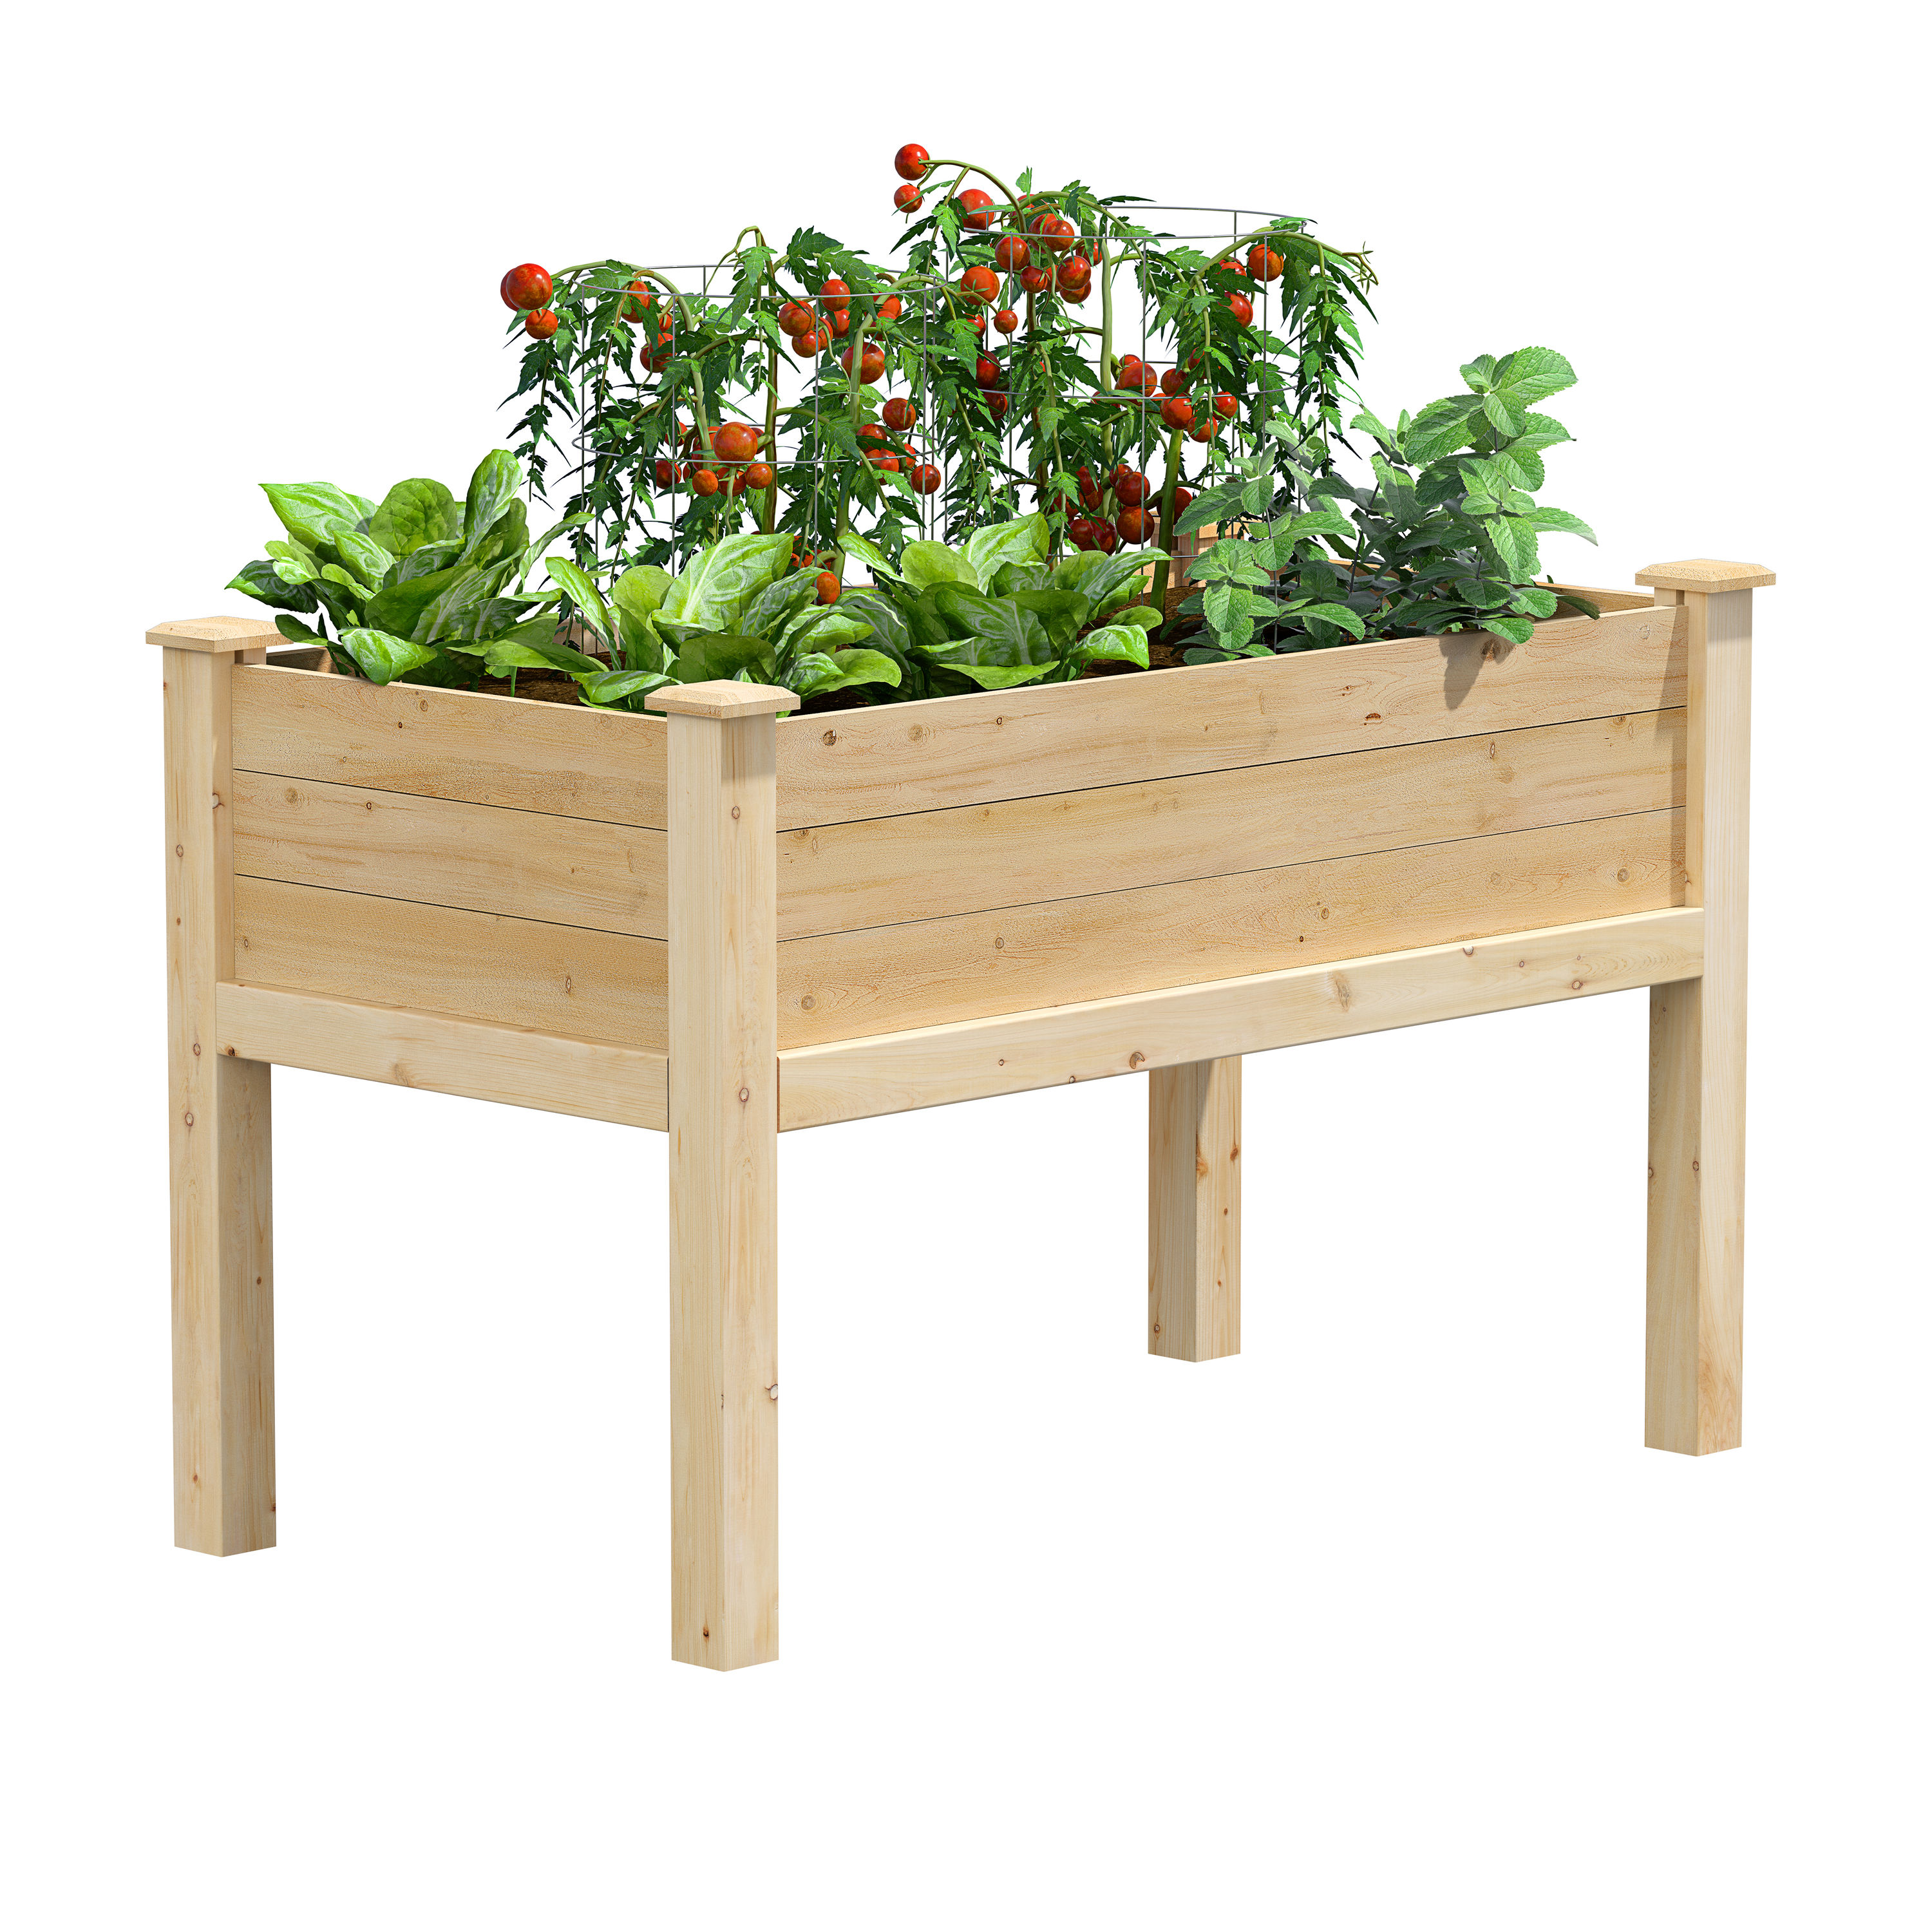 Raised Decking Wooden Garden Planter Box Vegetable Trough Grow Bed Plant Pot XL 